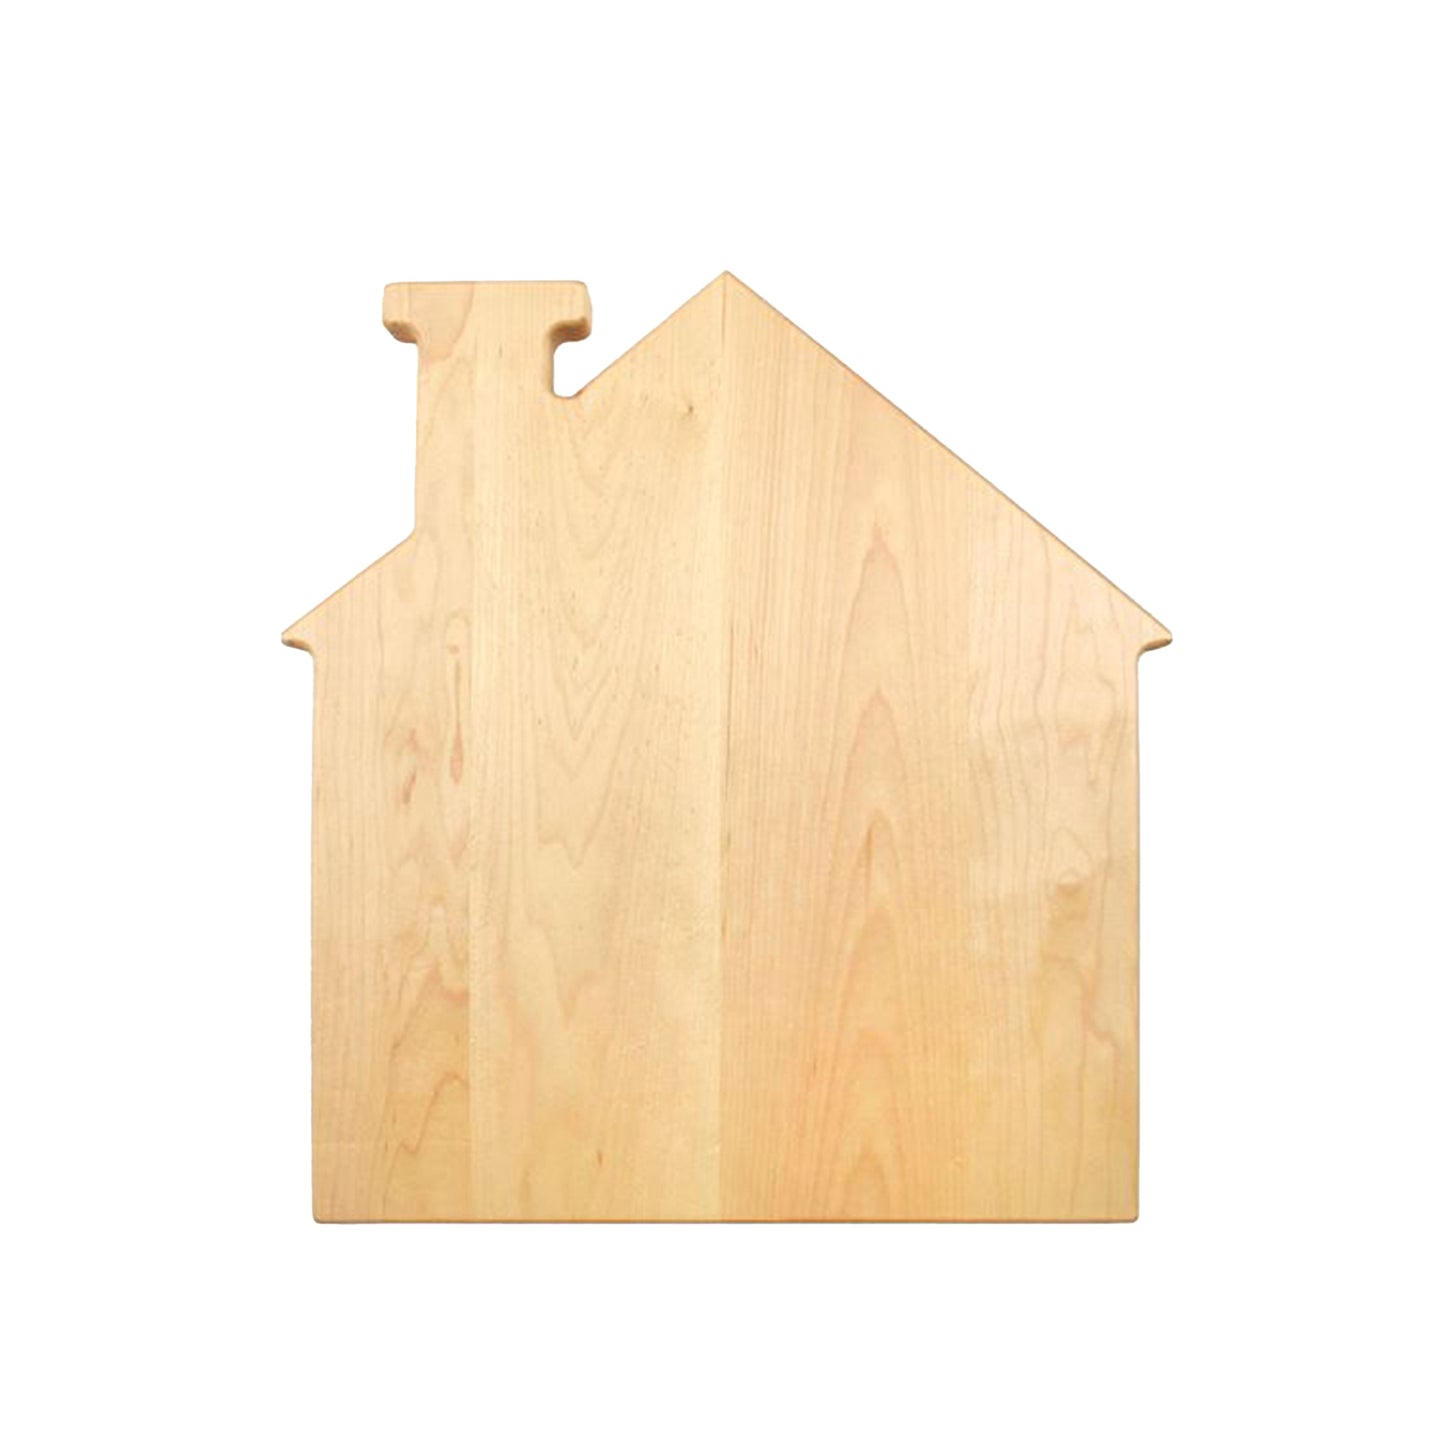 House Shaped Pine Wood Board - 13" x 14"